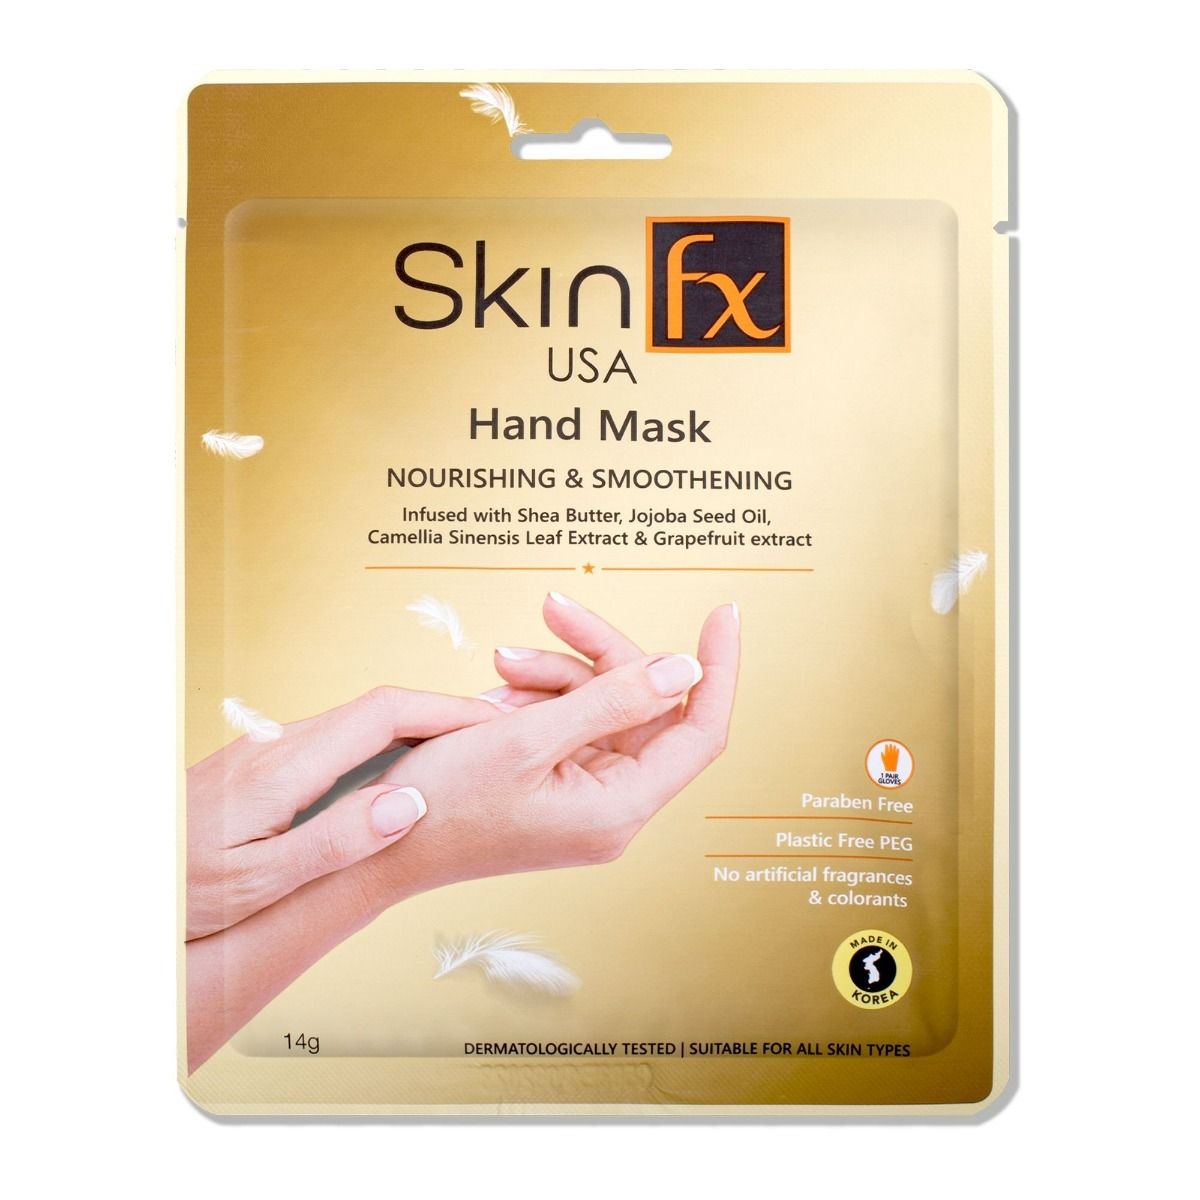 Skin Fx Nourishing & Smoothening Hand Mask, 14 gm, Pack of 1 